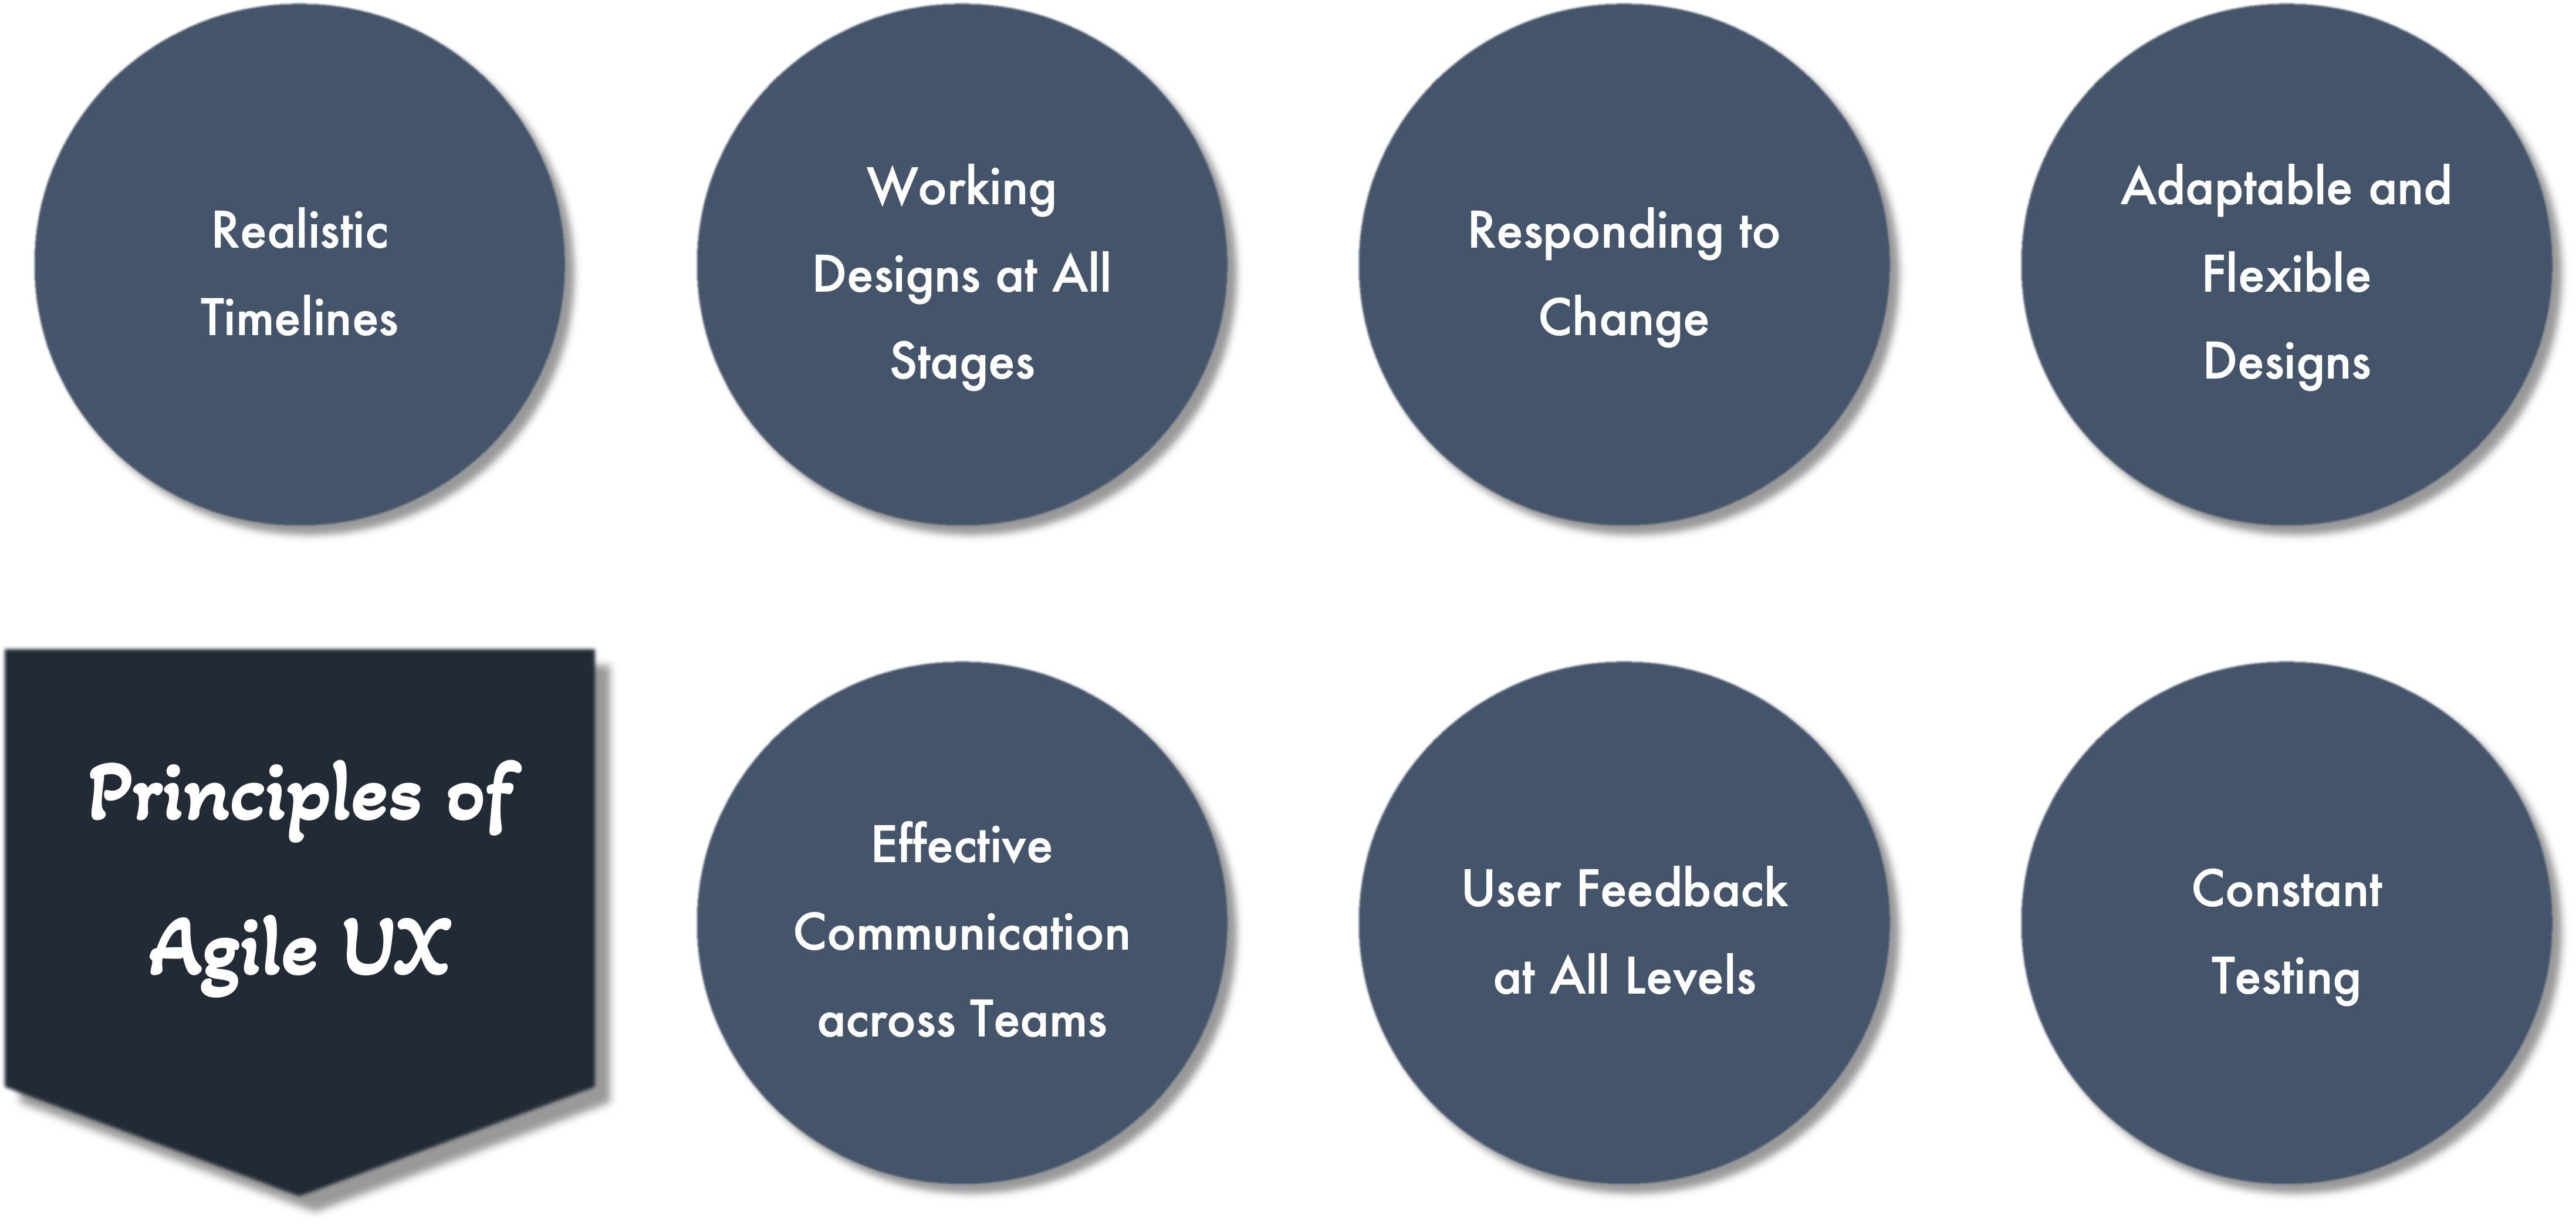 Image 4 - Principles of Agile UX